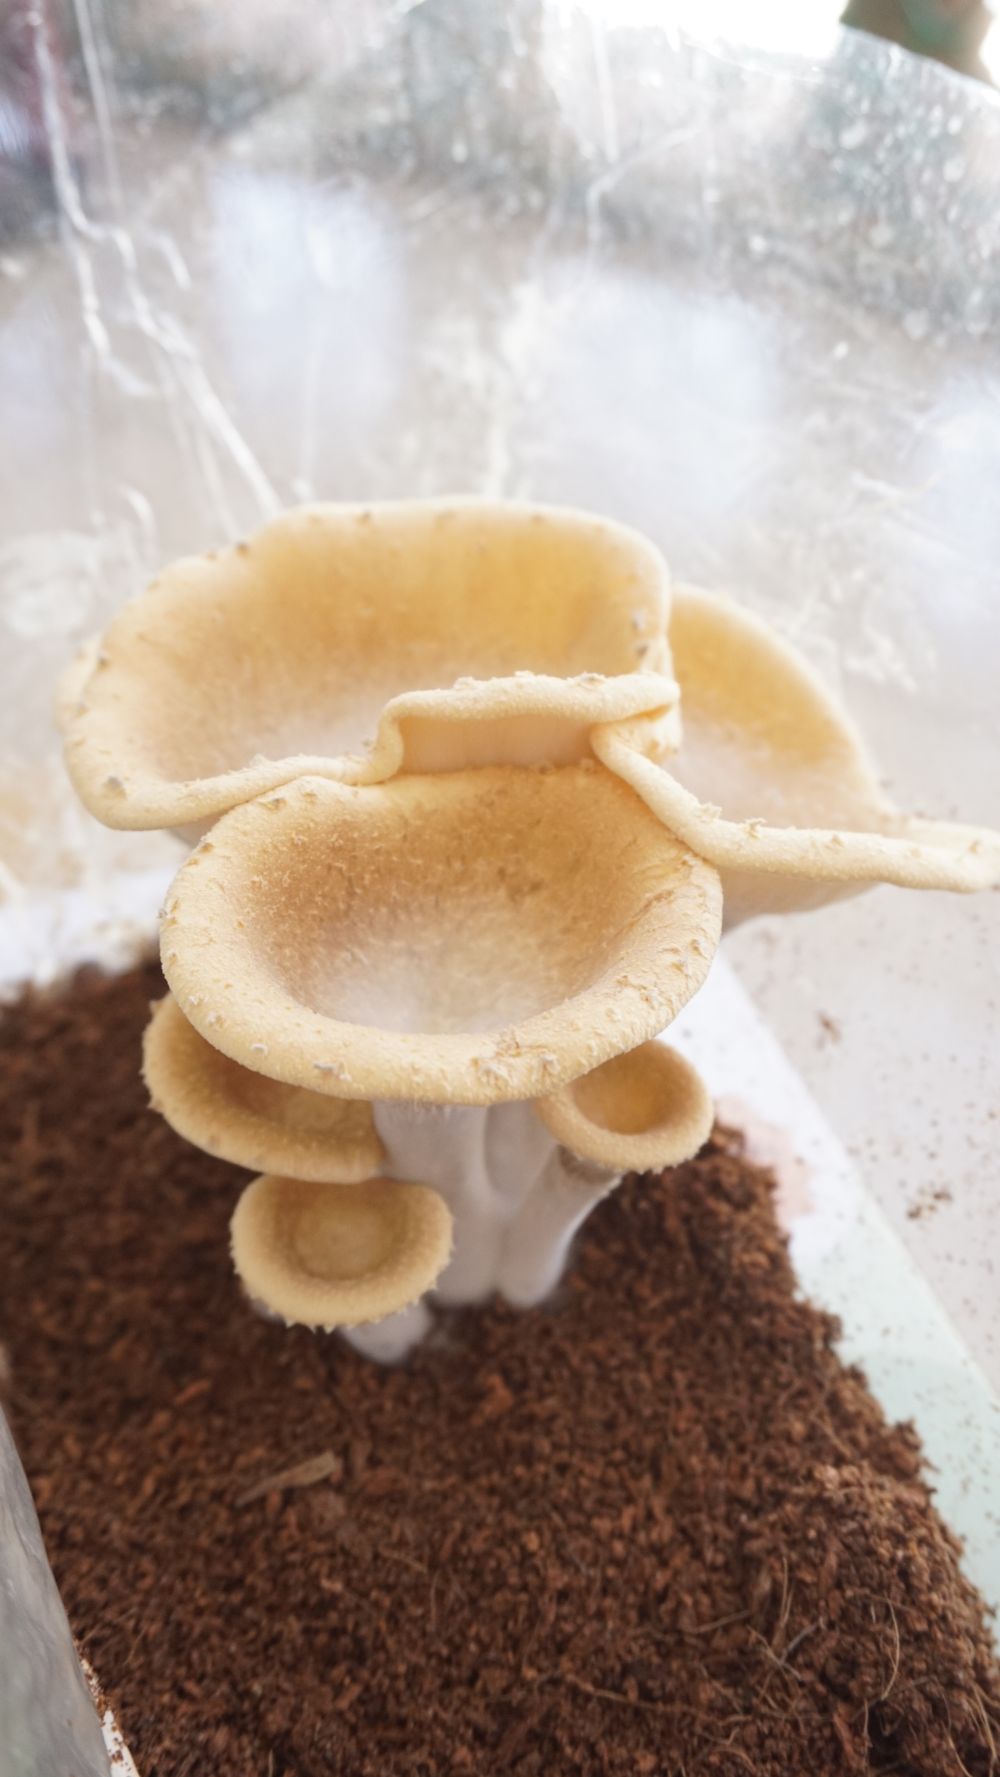 Nuvedo King Tuber Oyster Mushroom Growing Kit - CBD Store India